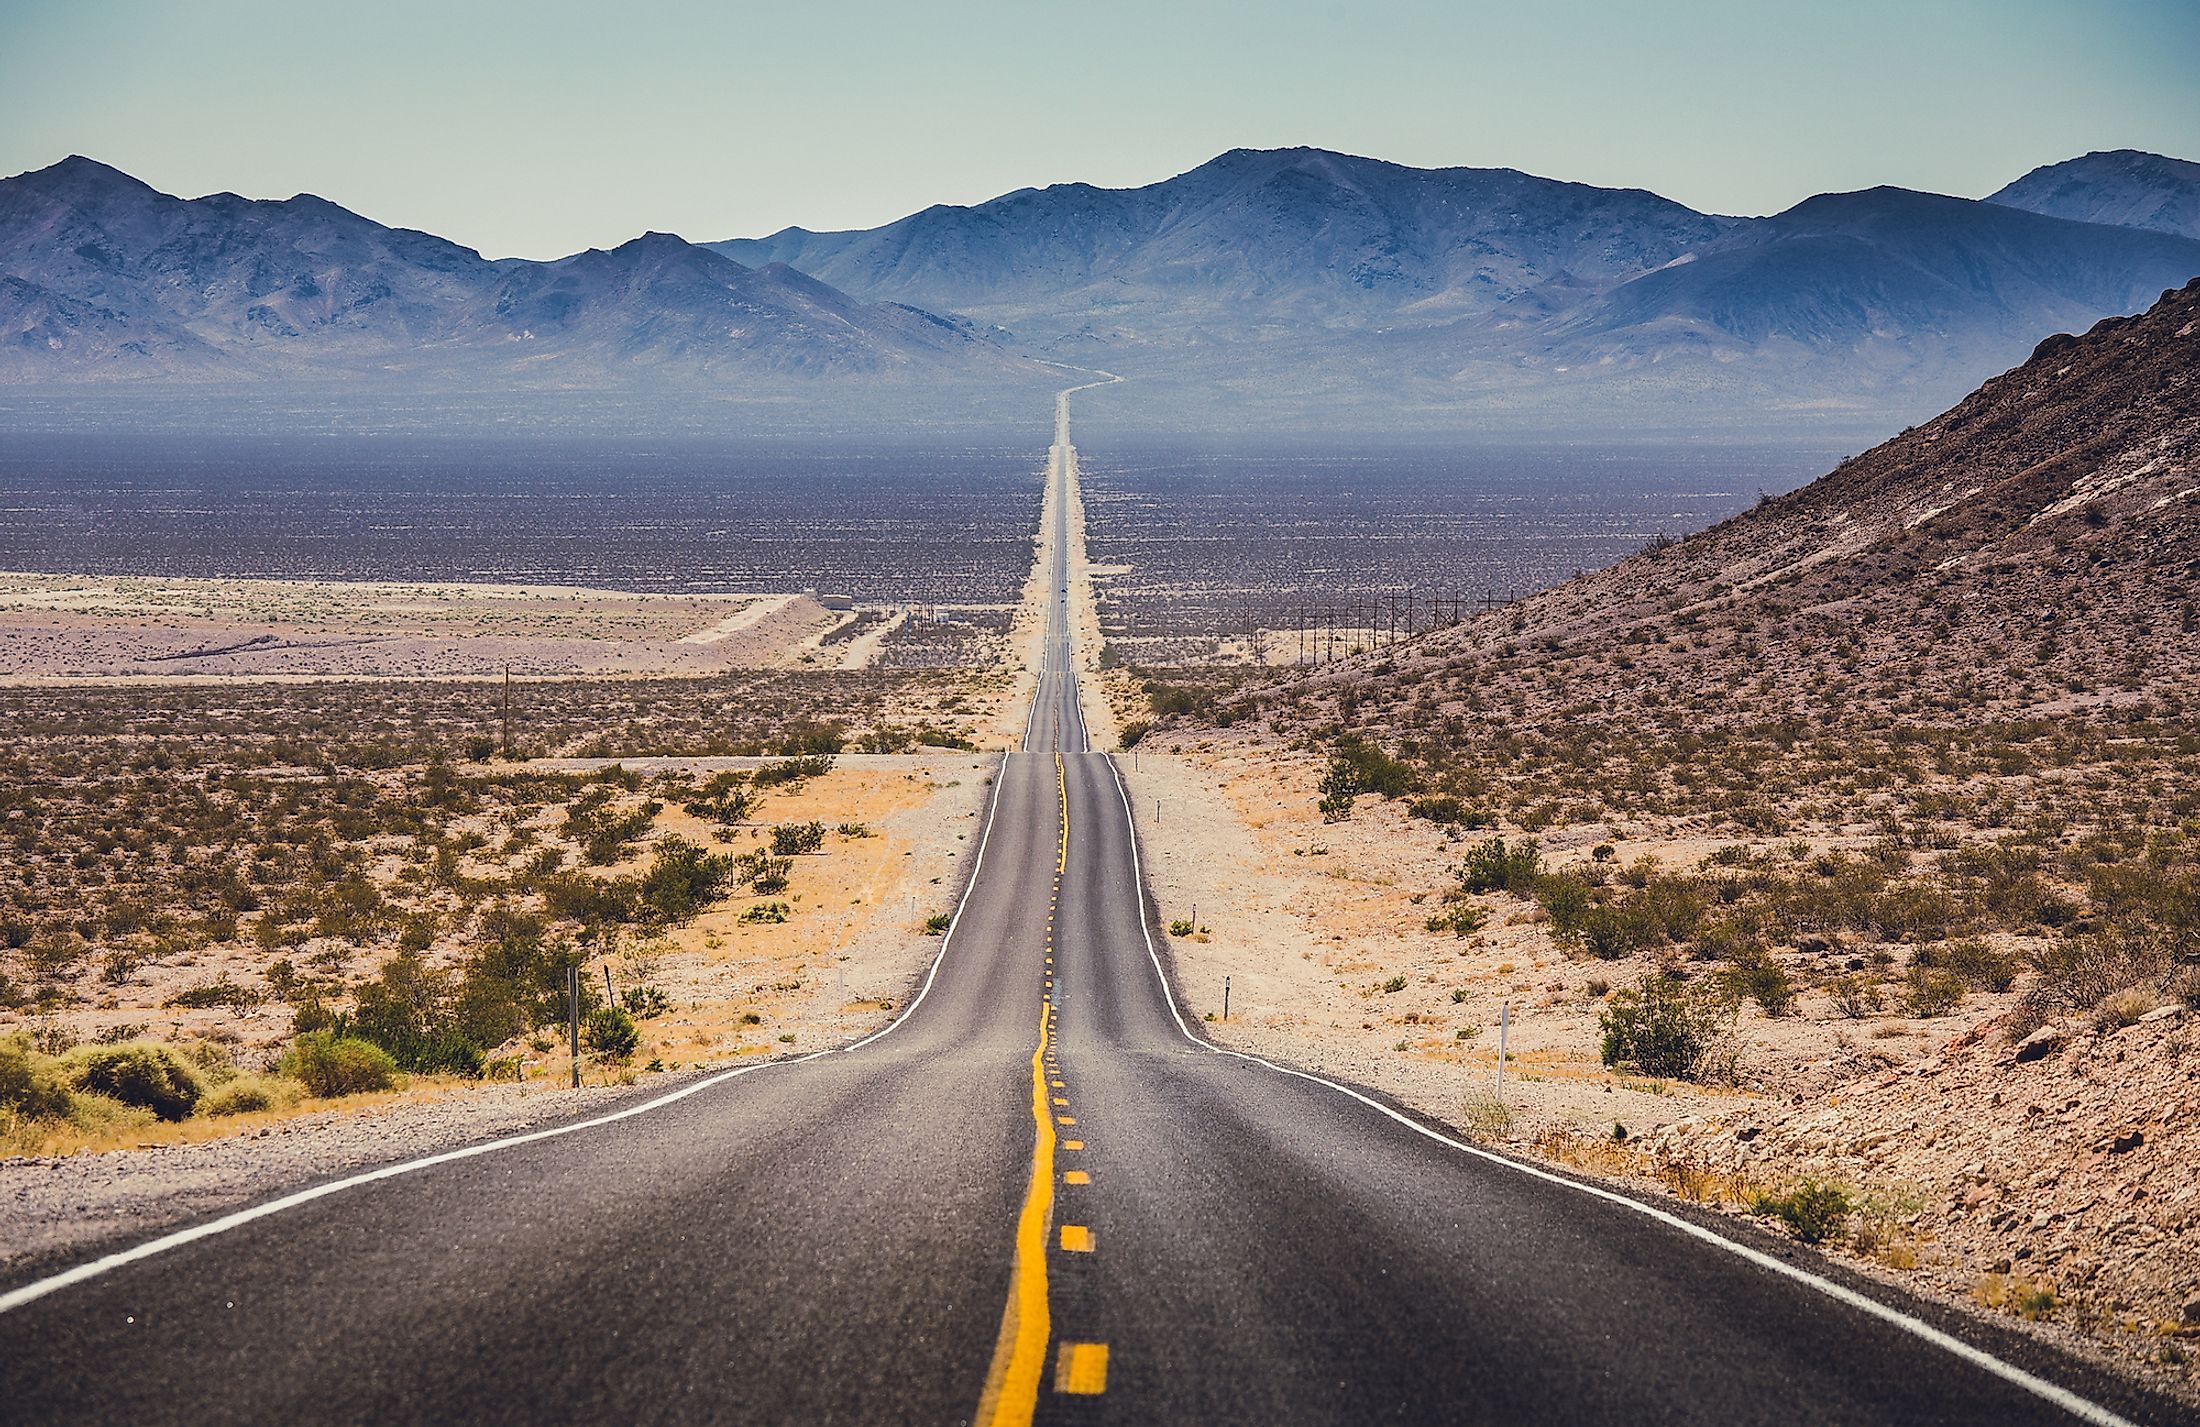 Road through desert.